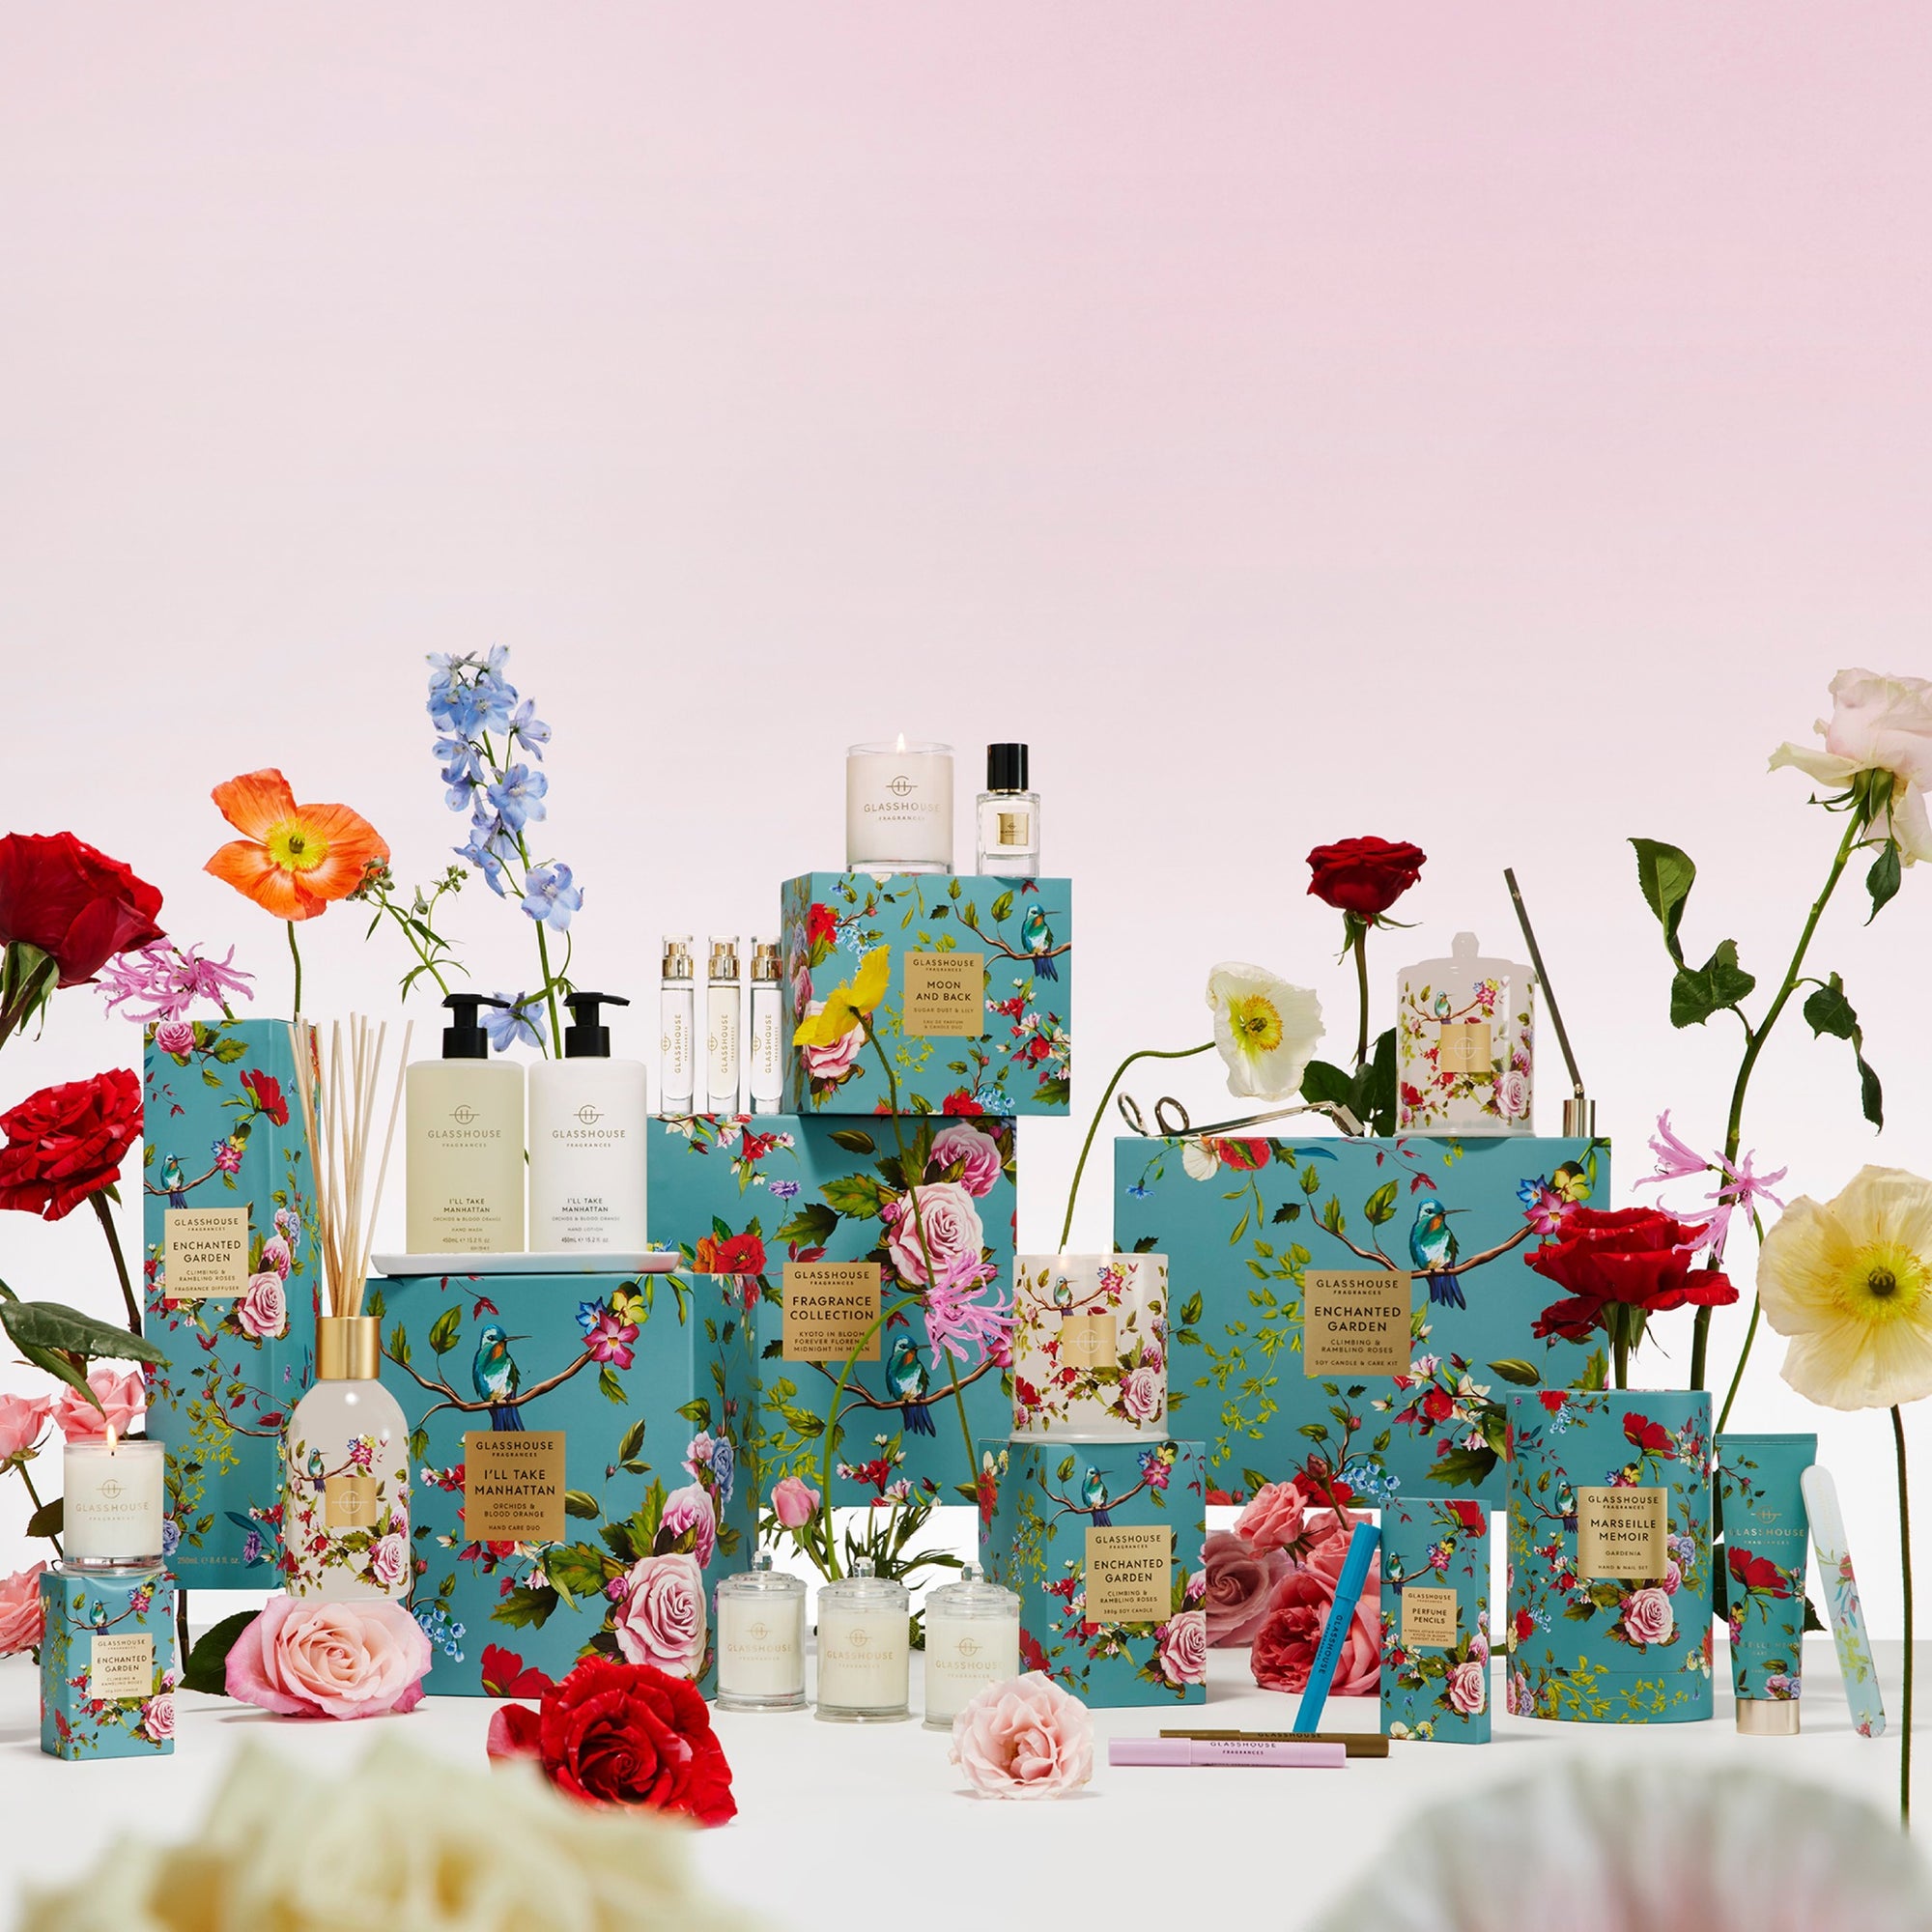 Glasshouse Fragrances Hand Care Duo Gift Set - Manhattan